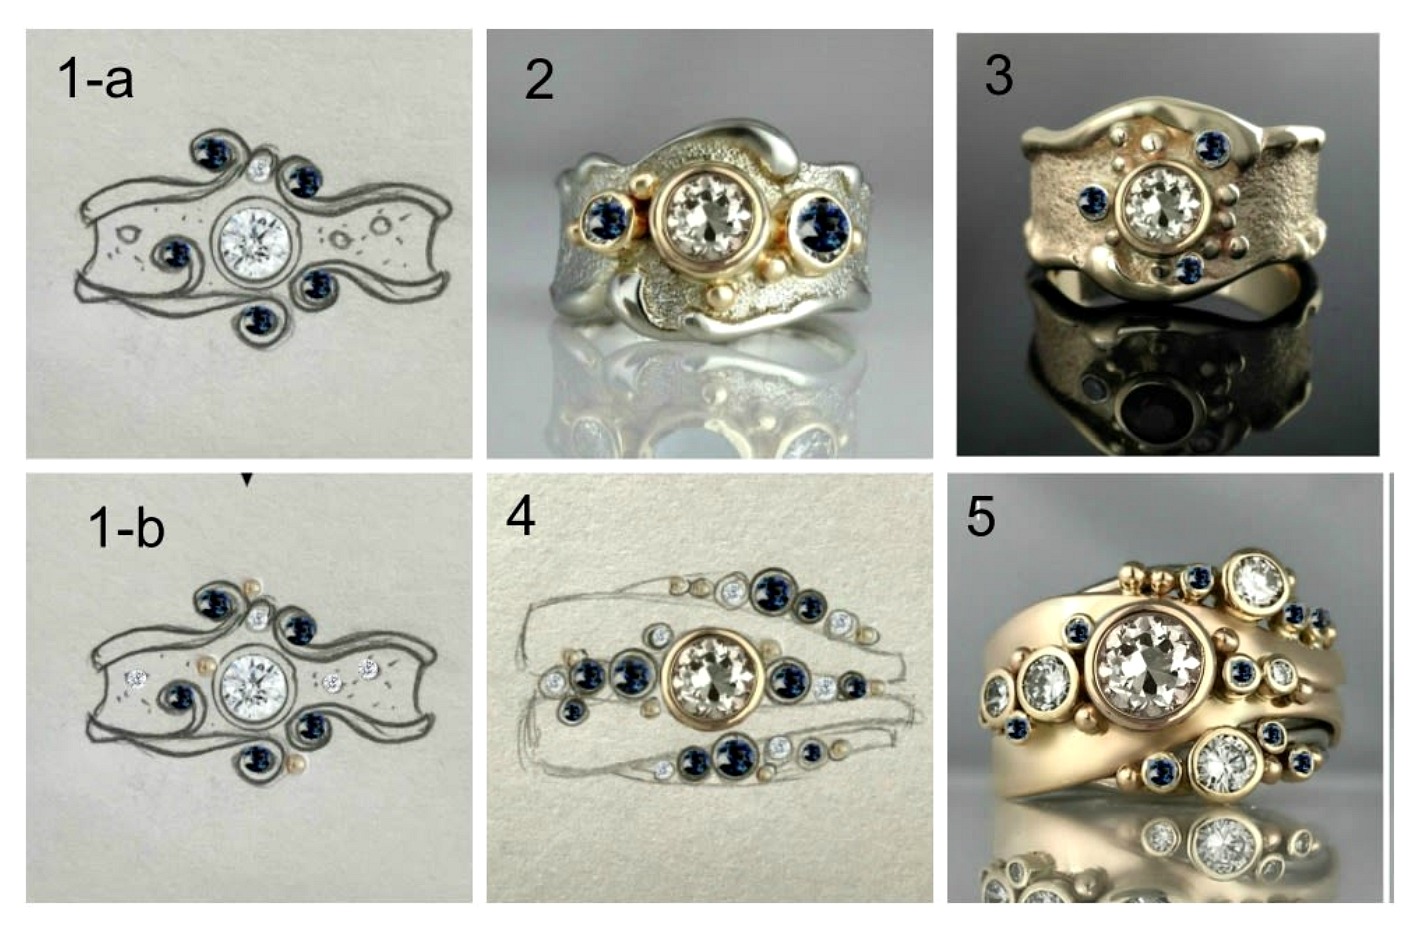 Customized jewellery design commission.